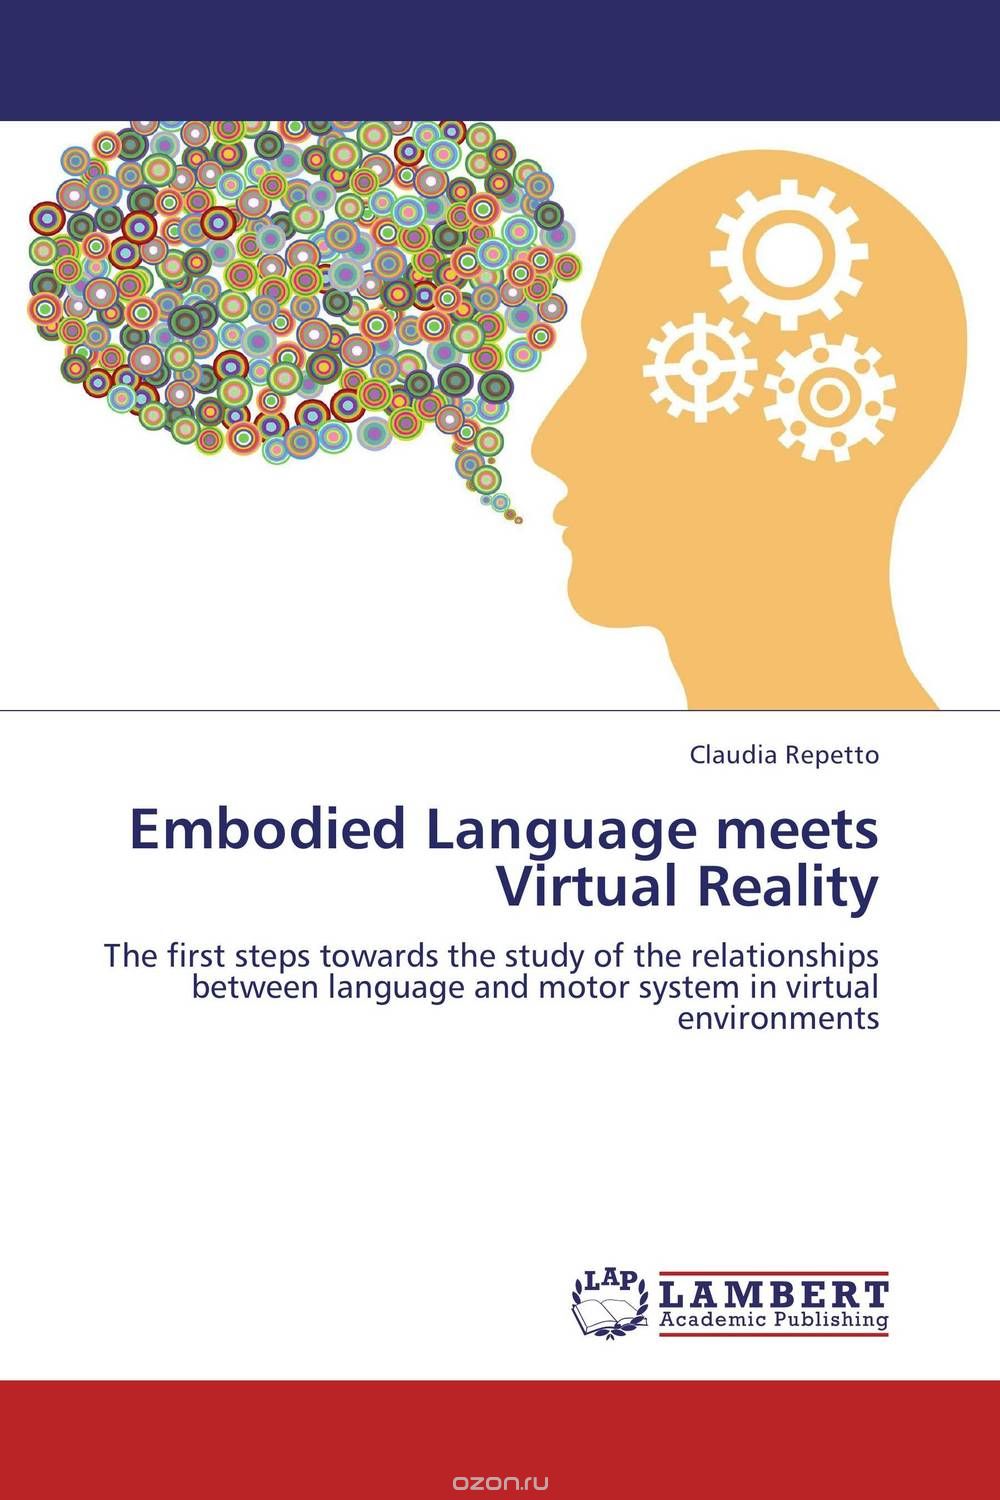 Embodied Language meets Virtual Reality